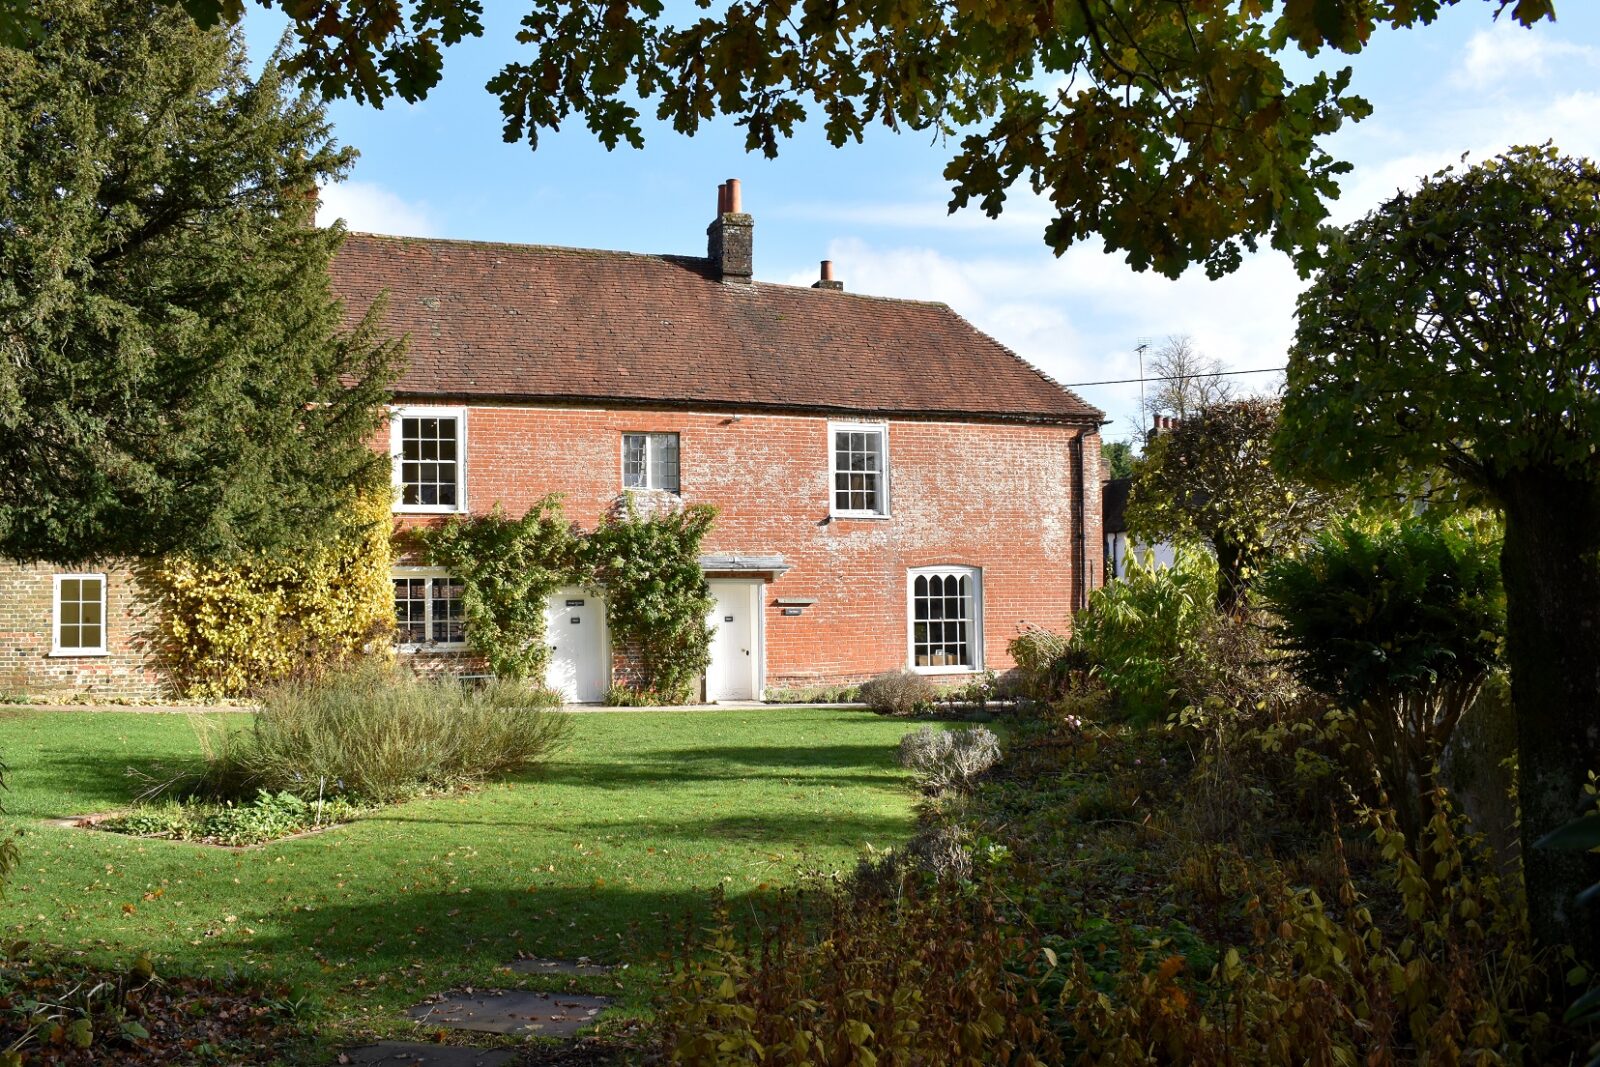 Jane Austen's House in the Autumn